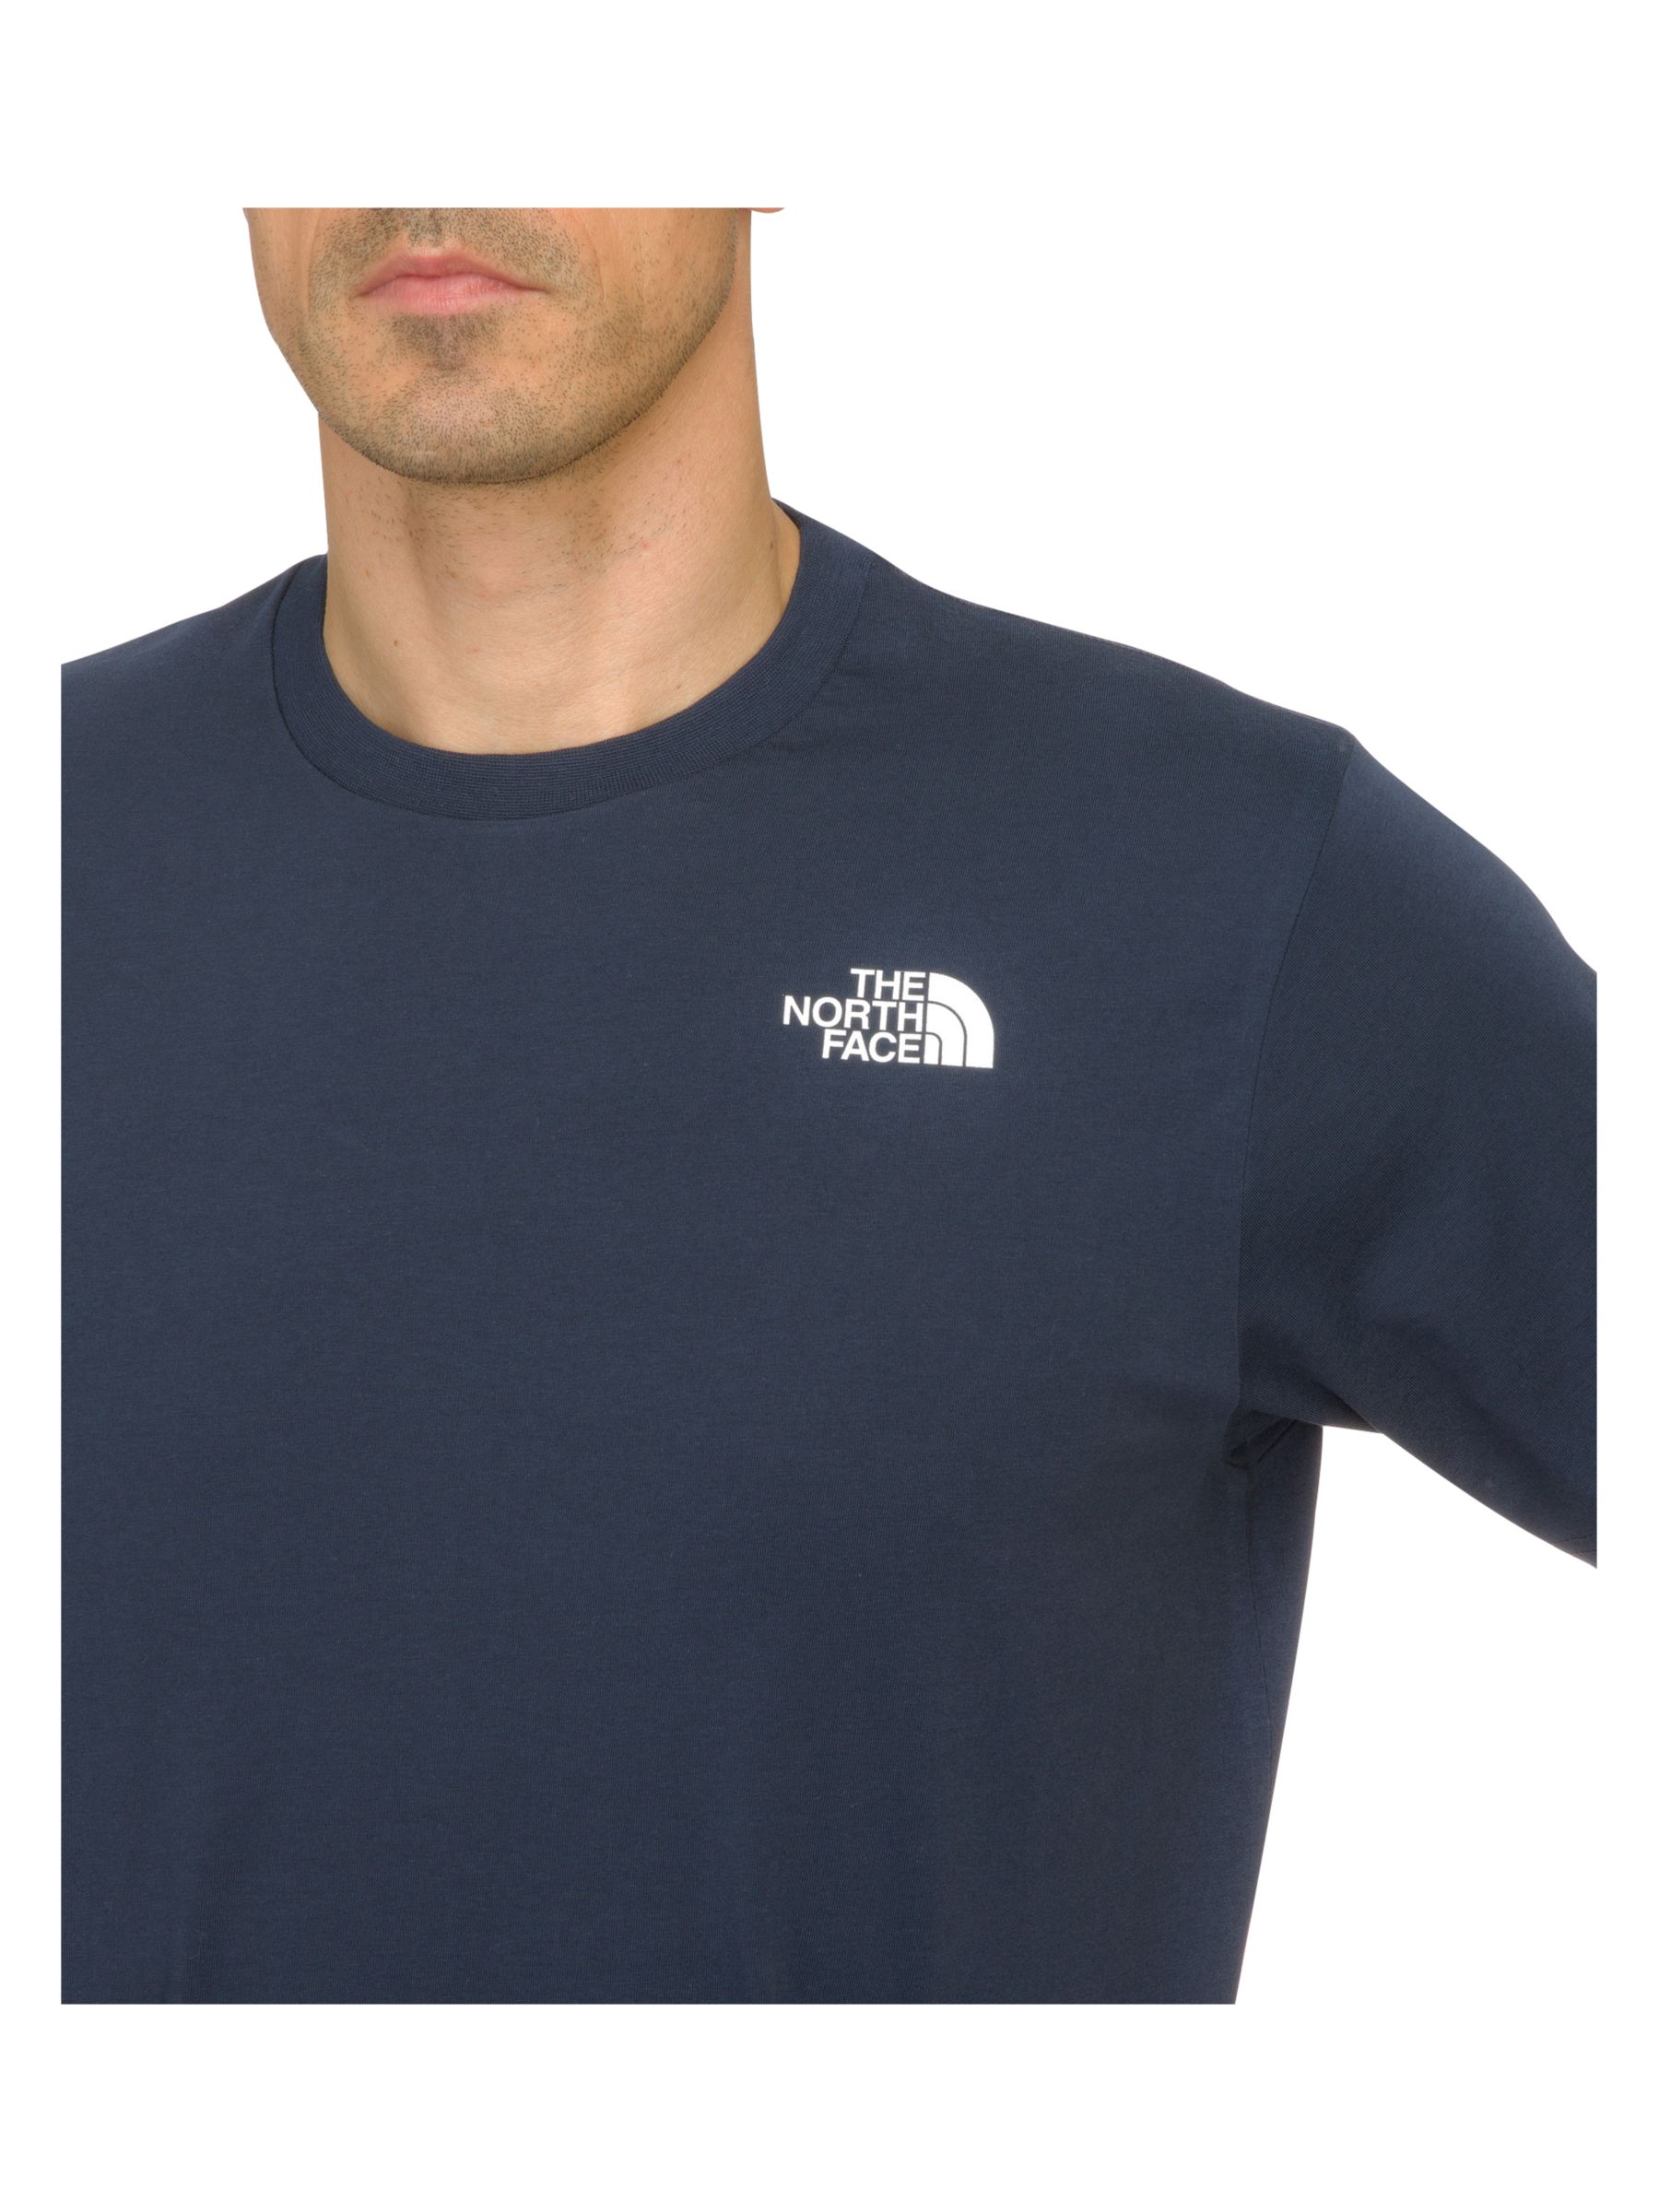 navy blue north face t shirt